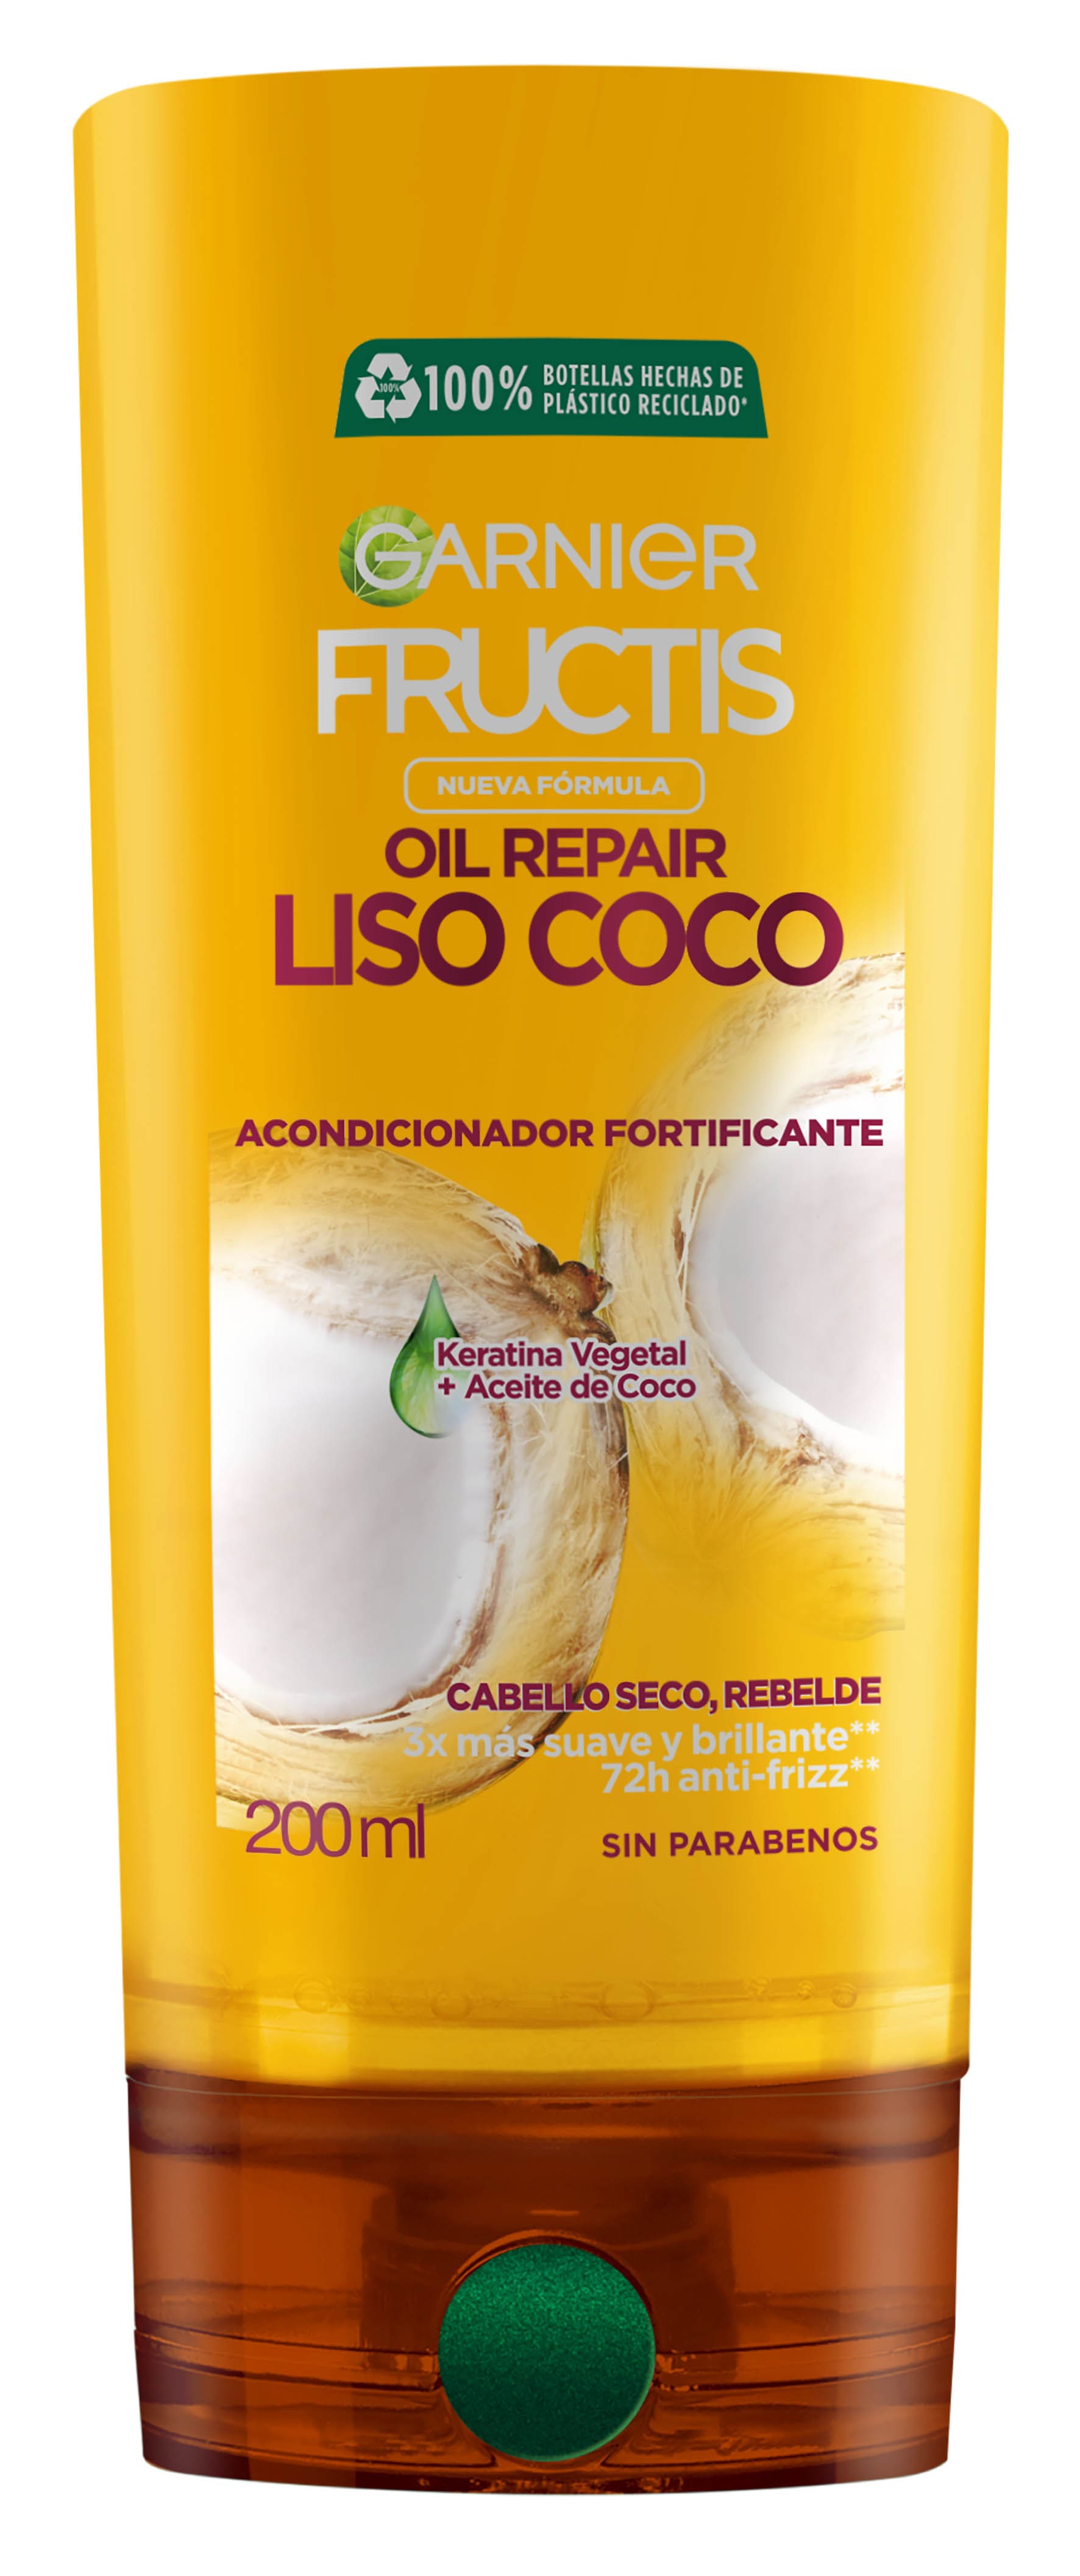 Fructis Acondicionador Oil Repair Liso Coco x 200 ml.